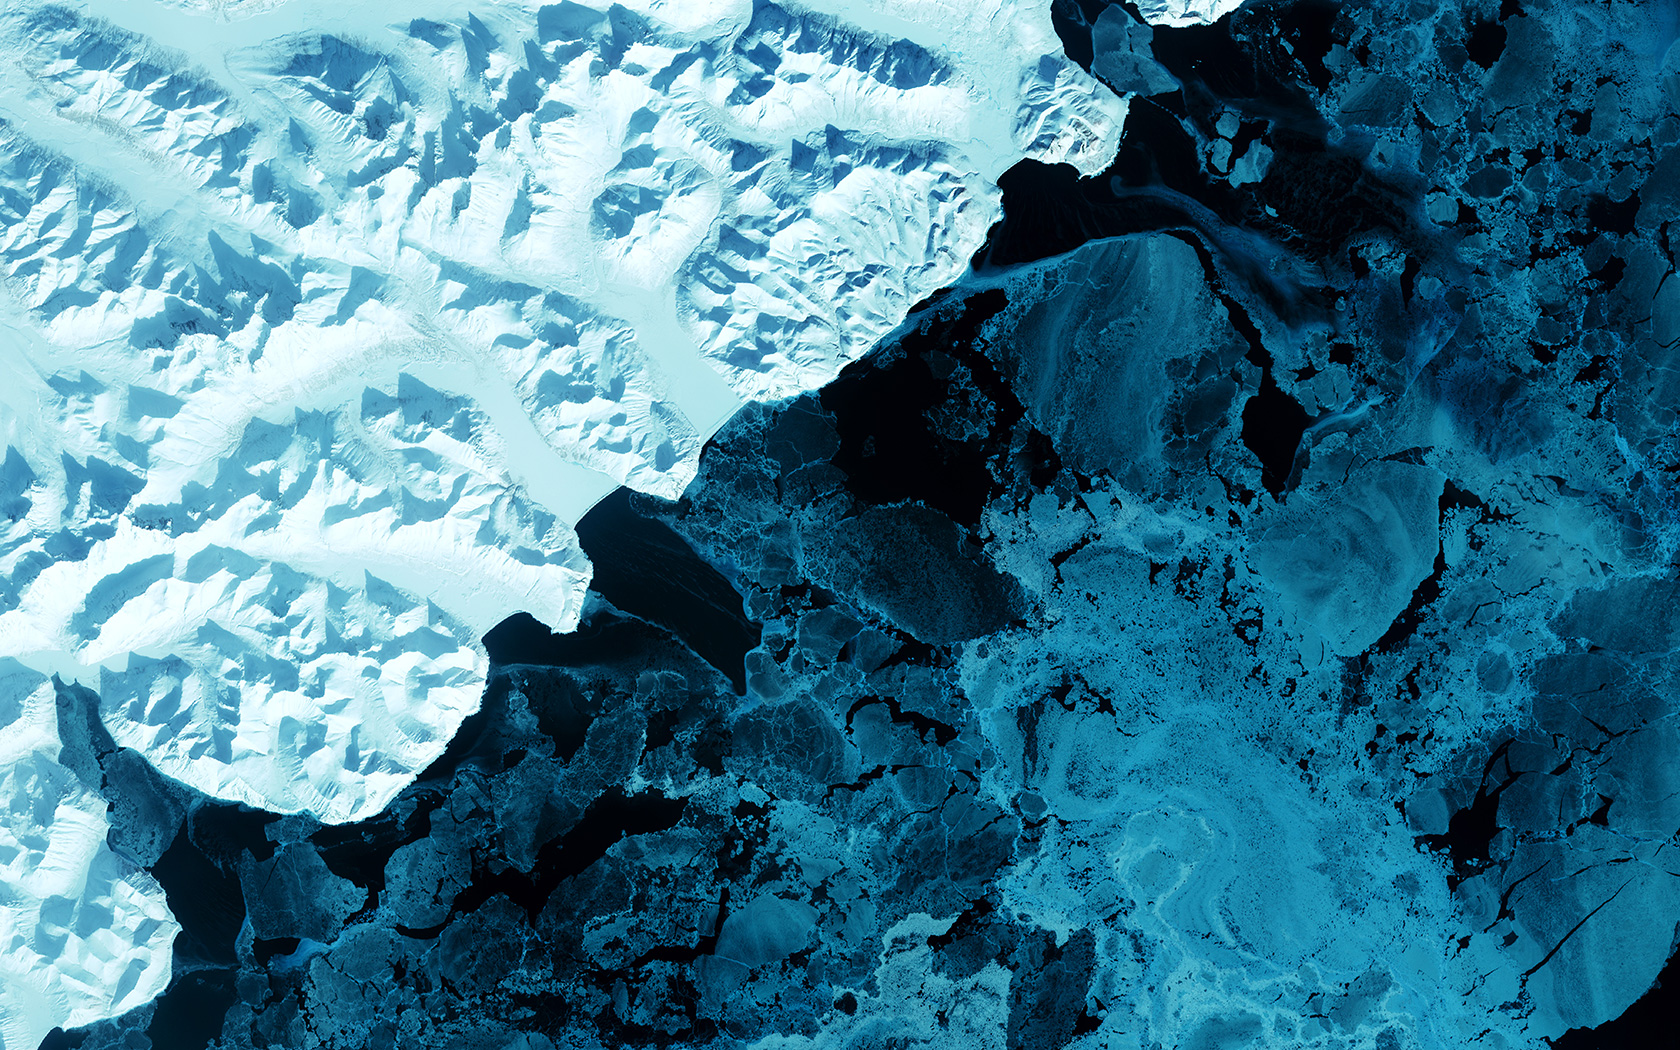 High definition desktop wallpaper of a glacier.